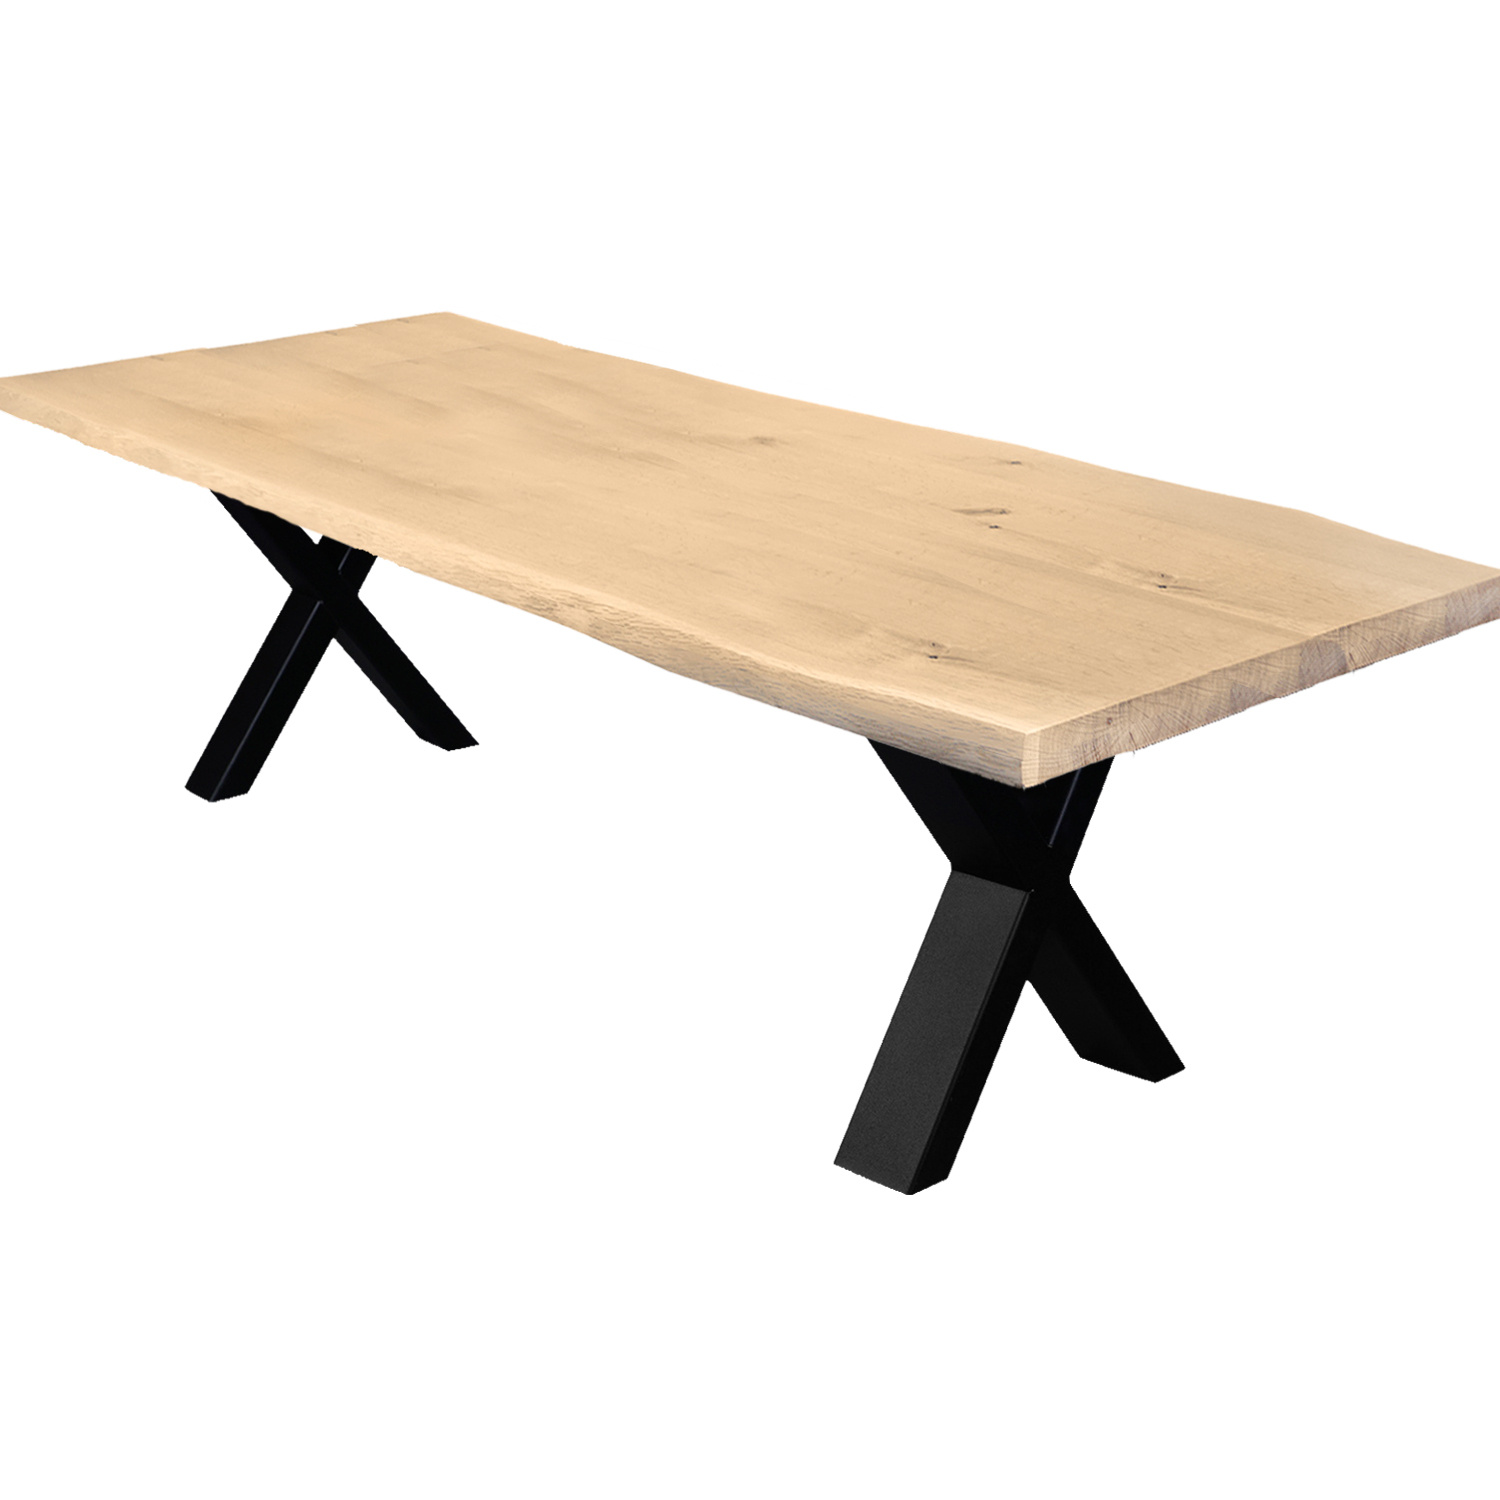 Tischplatte Eiche - mit Baumkante - 4 cm dick 2-lagig rustikal! |  Eichenholz Profi